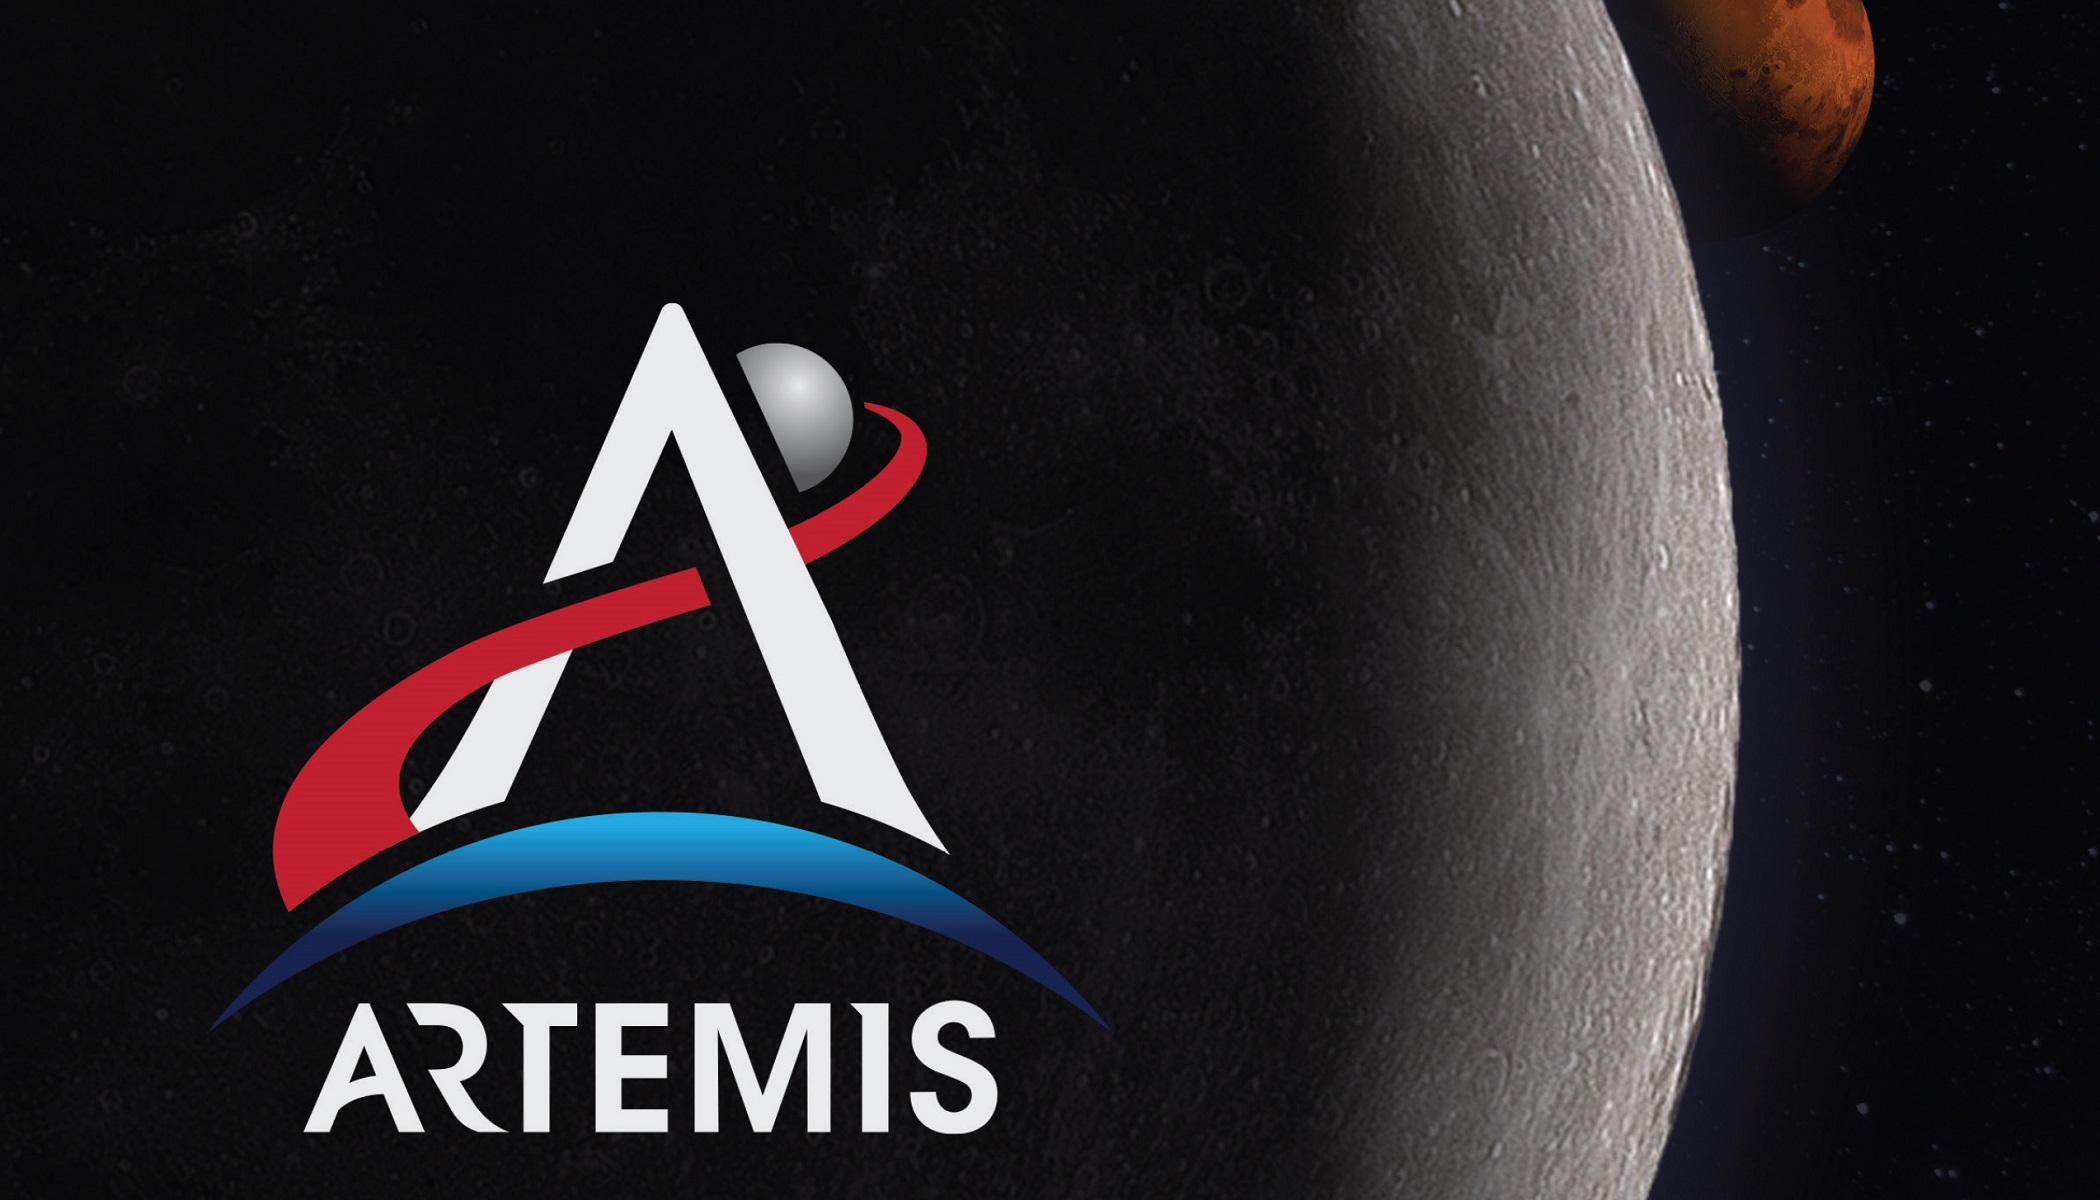 Artemis programma